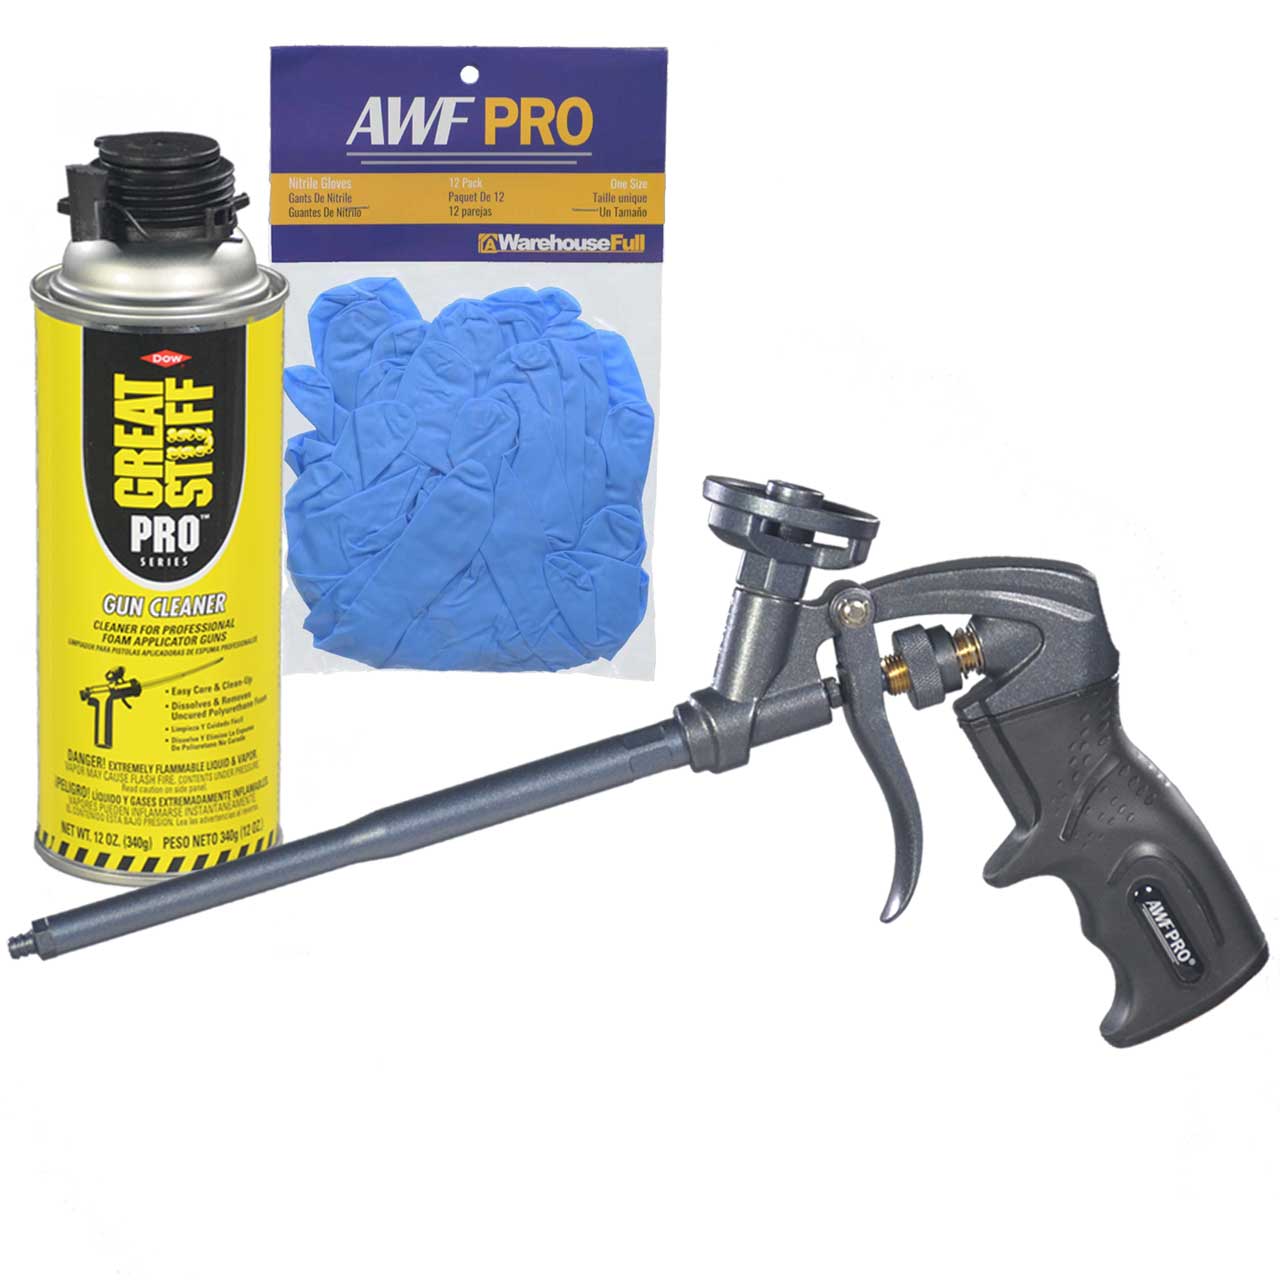 AWF Pro Barrel 60 cm 2 ft Pro Foam Gun Swivel Tip One Hand Adjustment